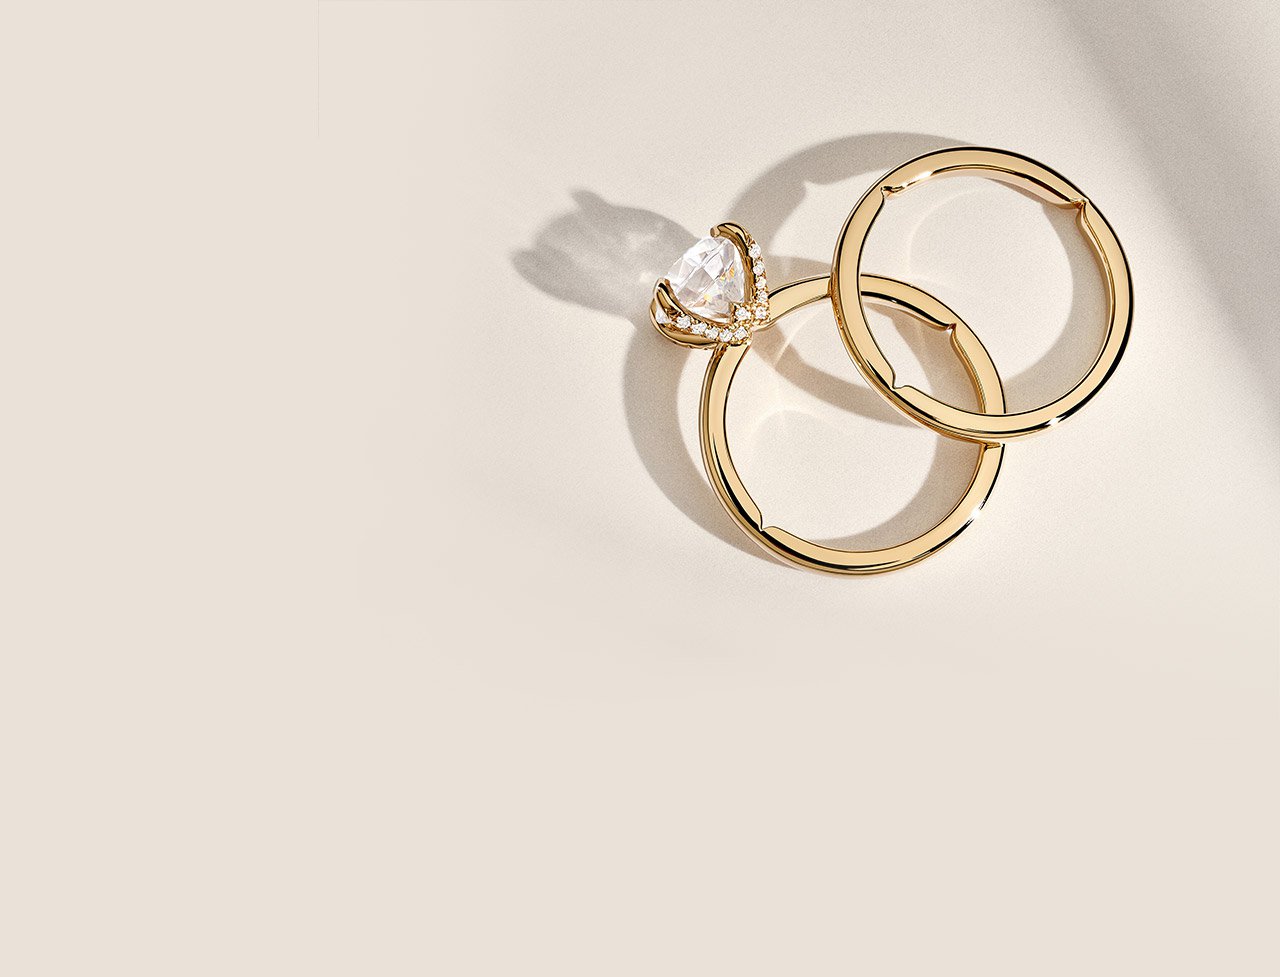 Gold diamond engagement ring and matching wedding band